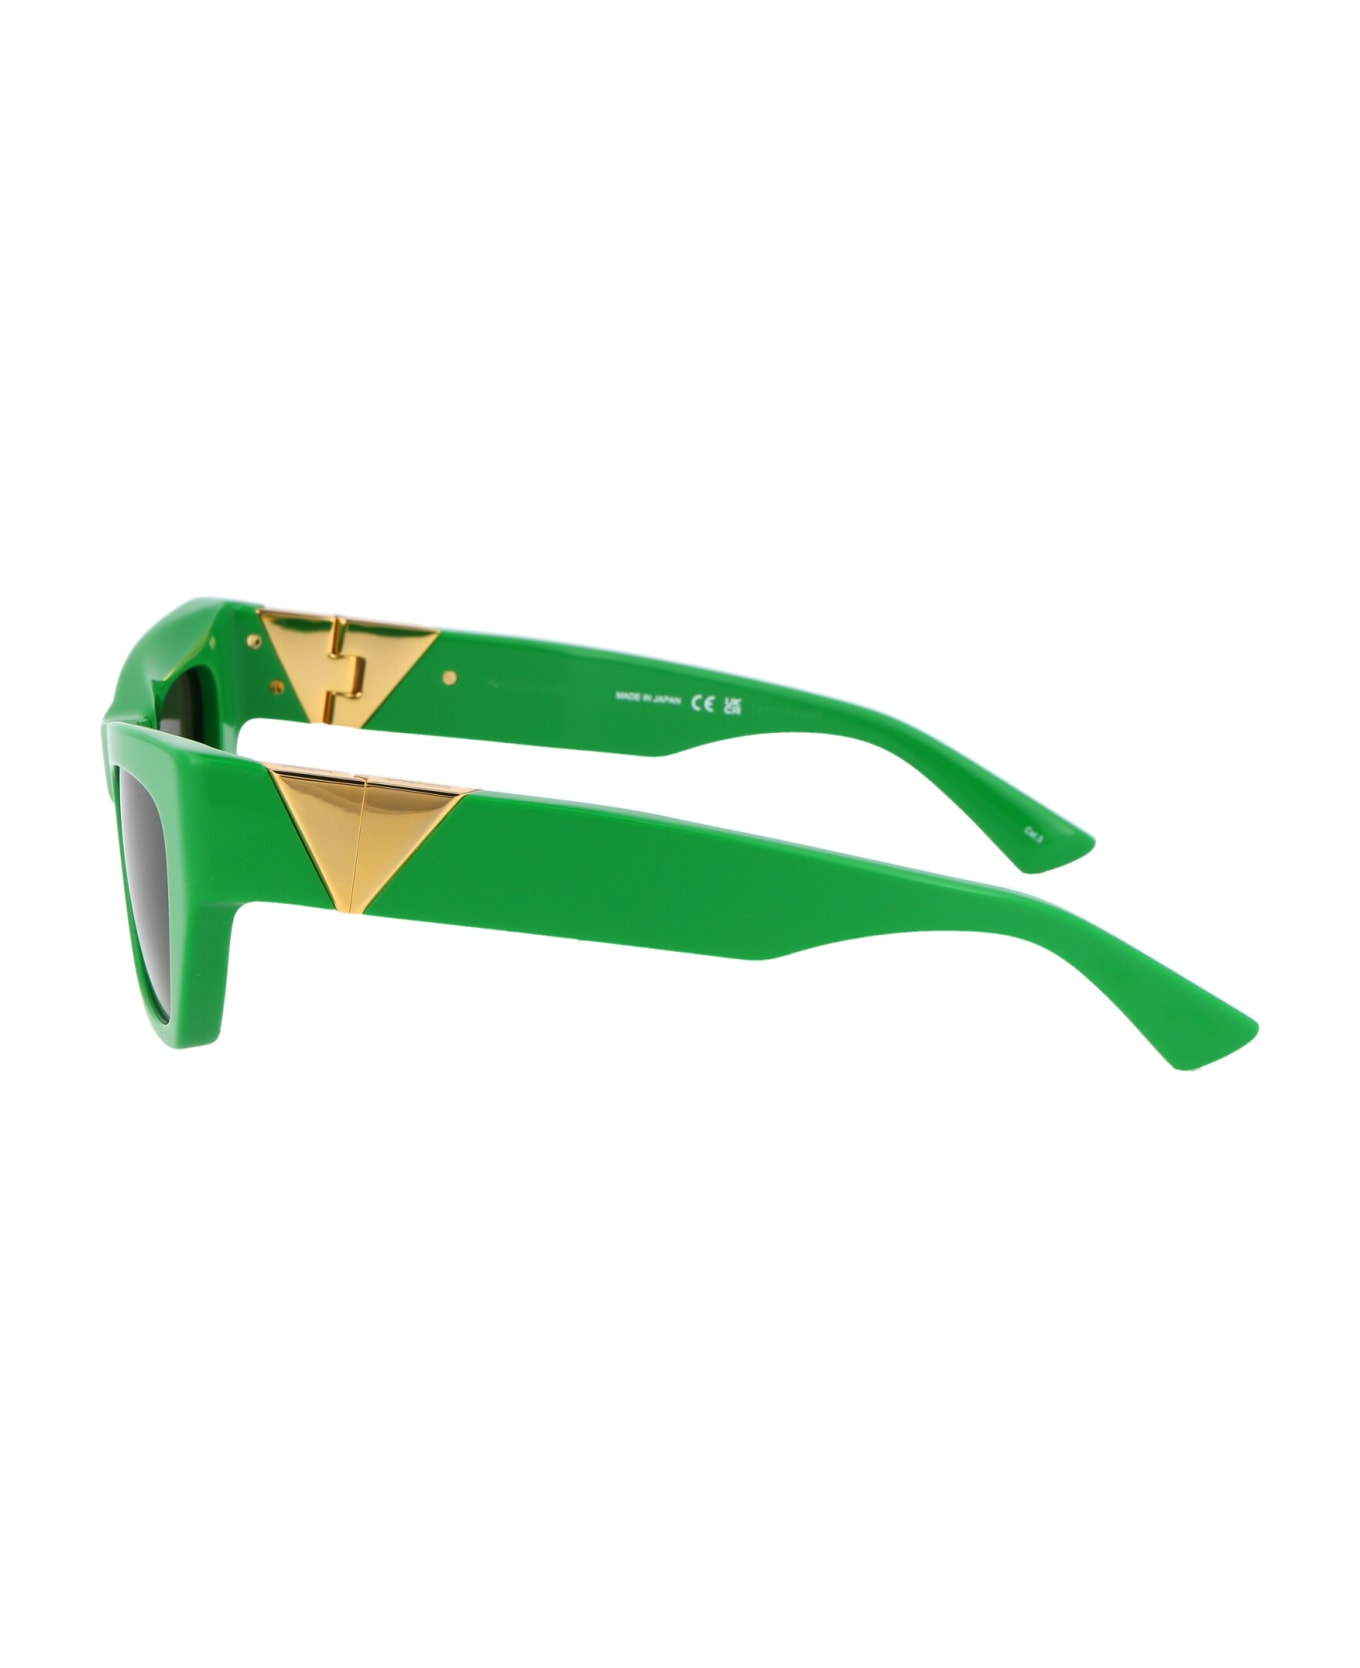 Bottega Veneta Eyewear Bv1177s Sunglasses - 003 GREEN GREEN GREEN